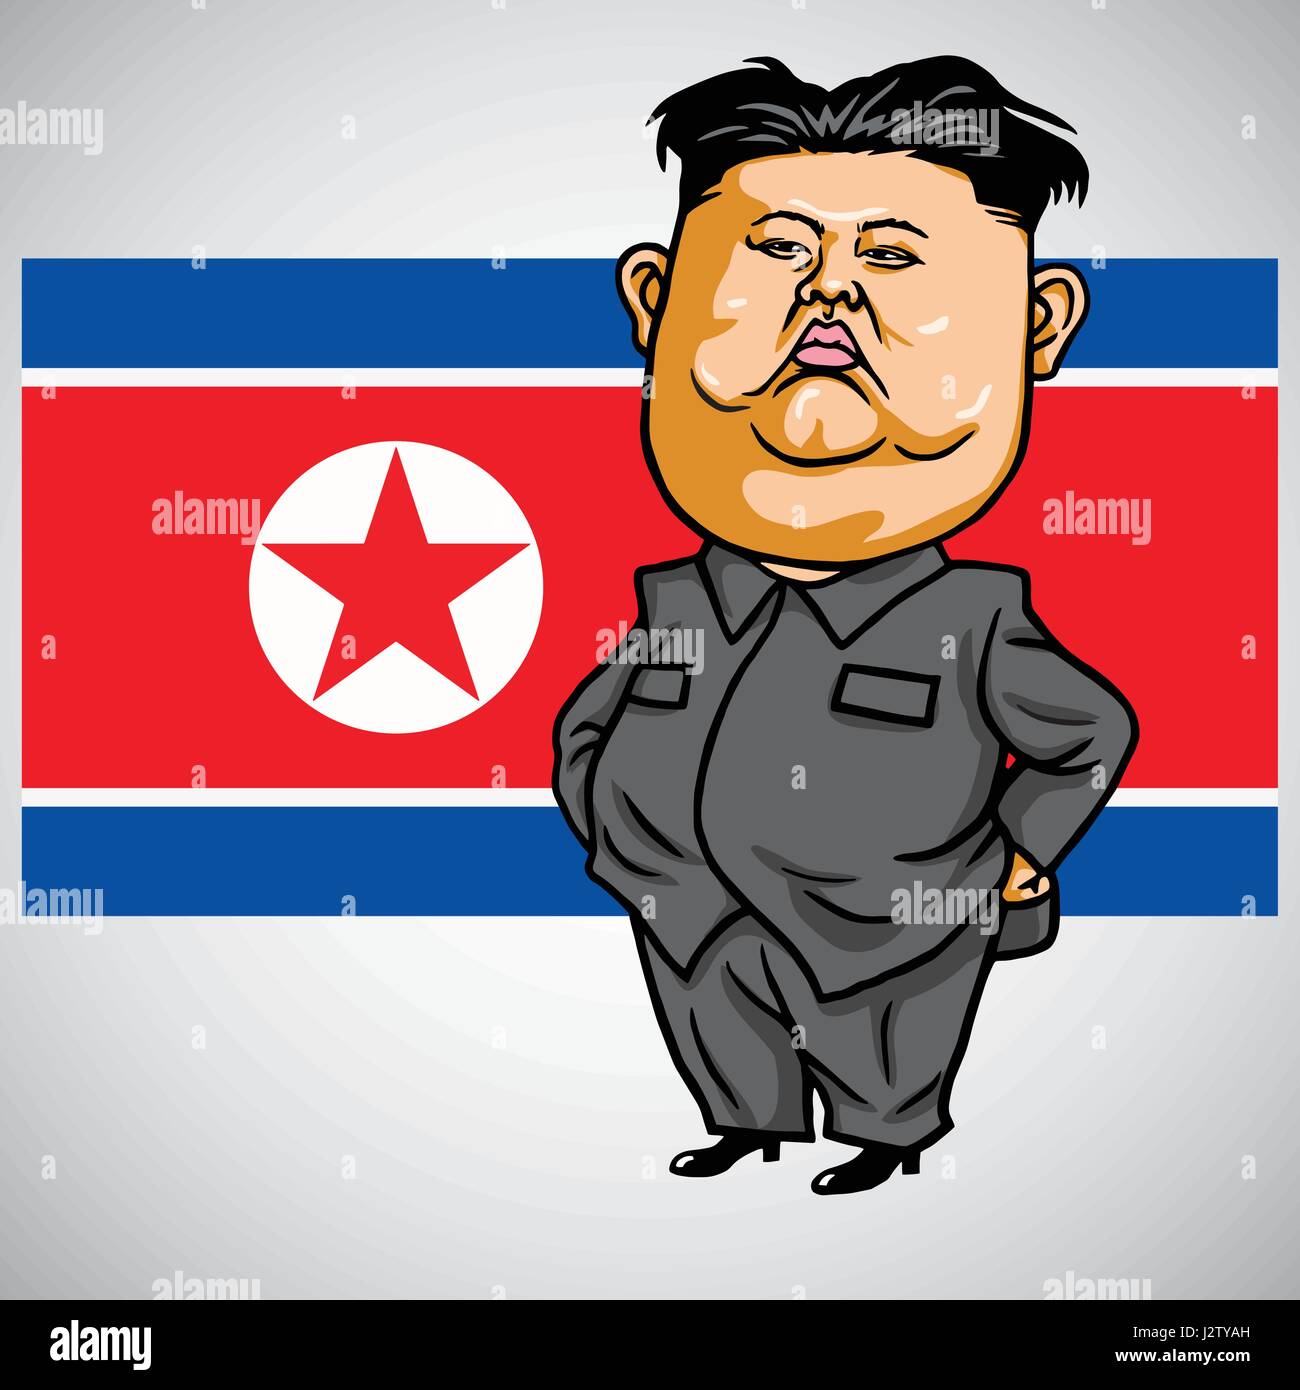 Kim Jong-un Cartoon with North Korea Flag. Vector Illustration. May